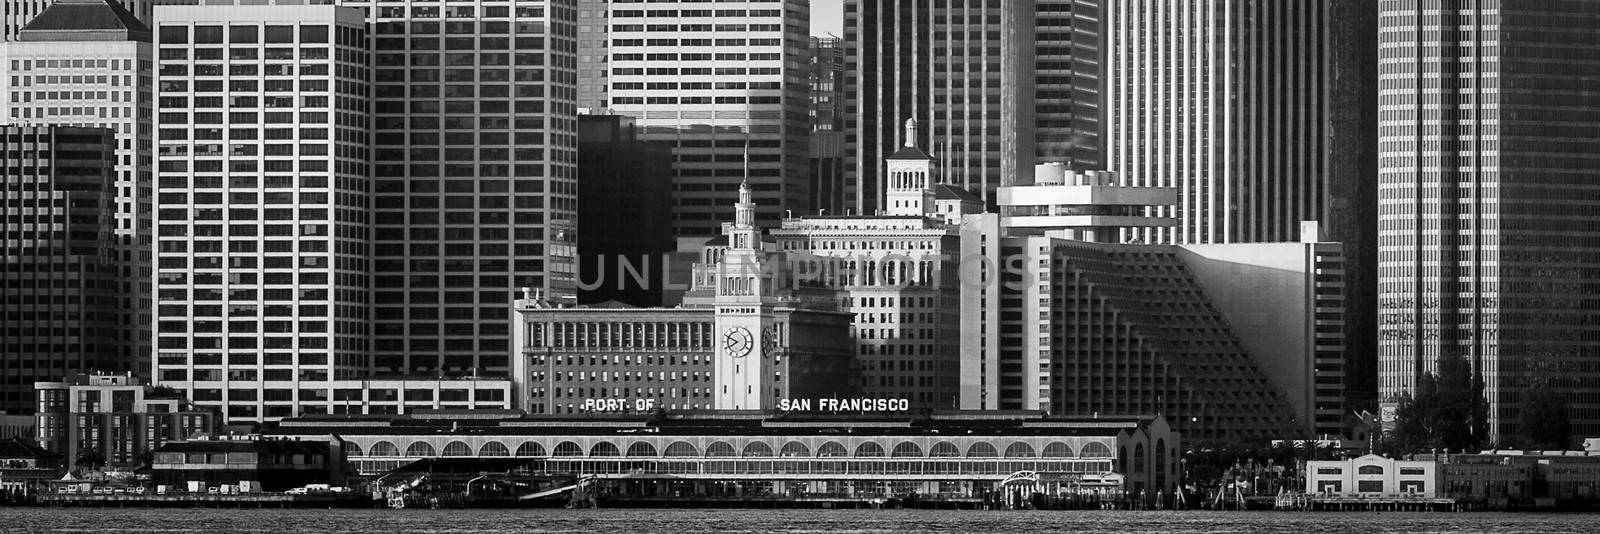 San Francisco buildings by CelsoDiniz